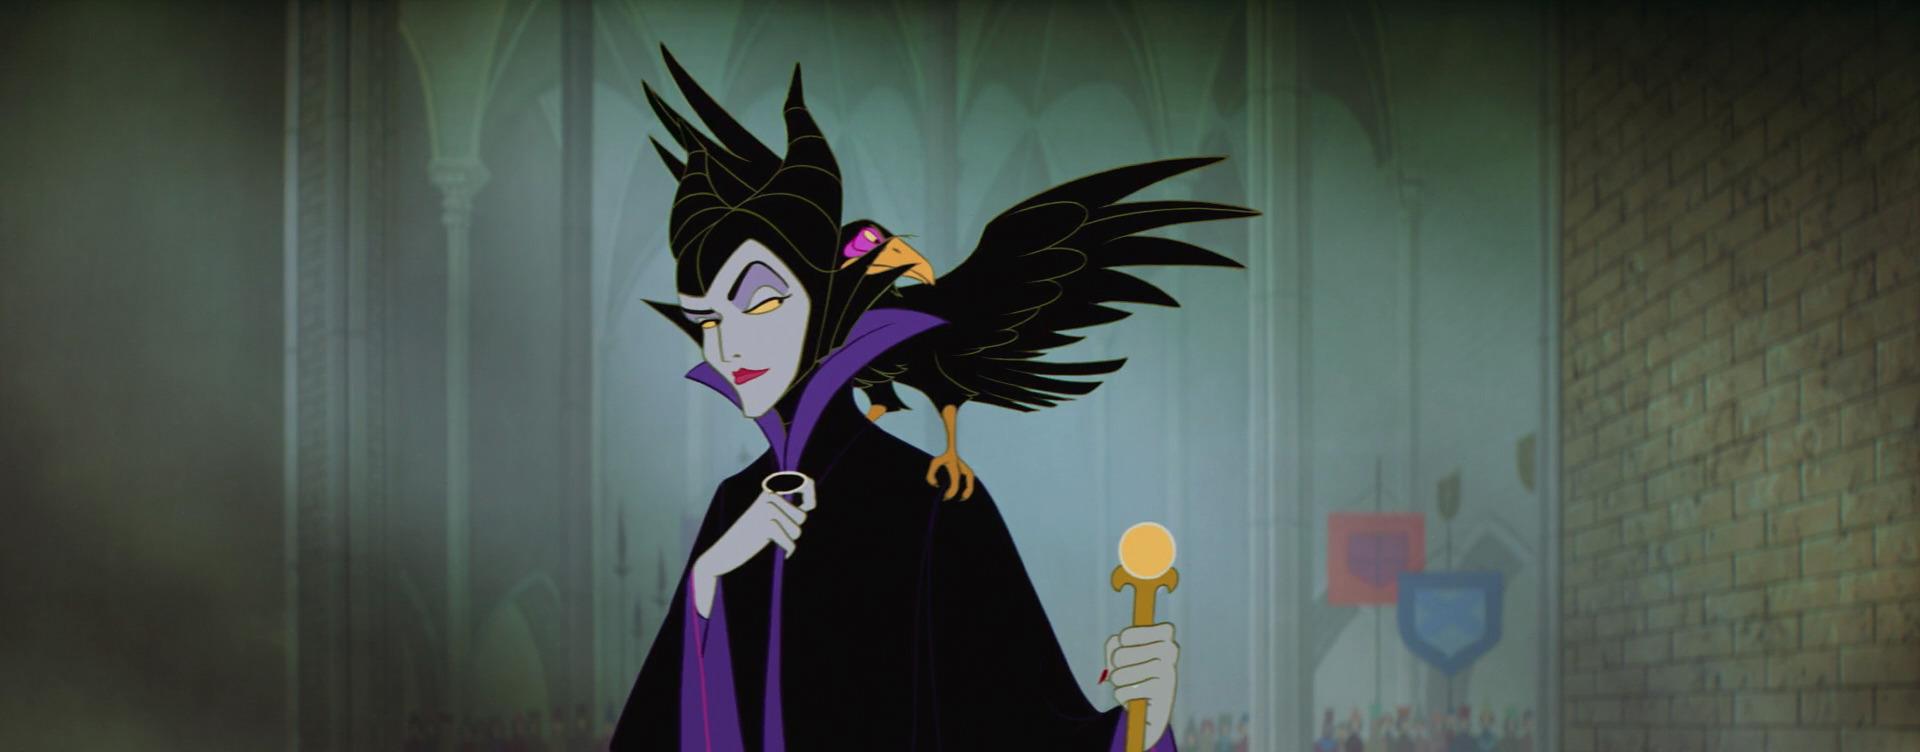 Sleeping Beauty Maleficent Wallpaper